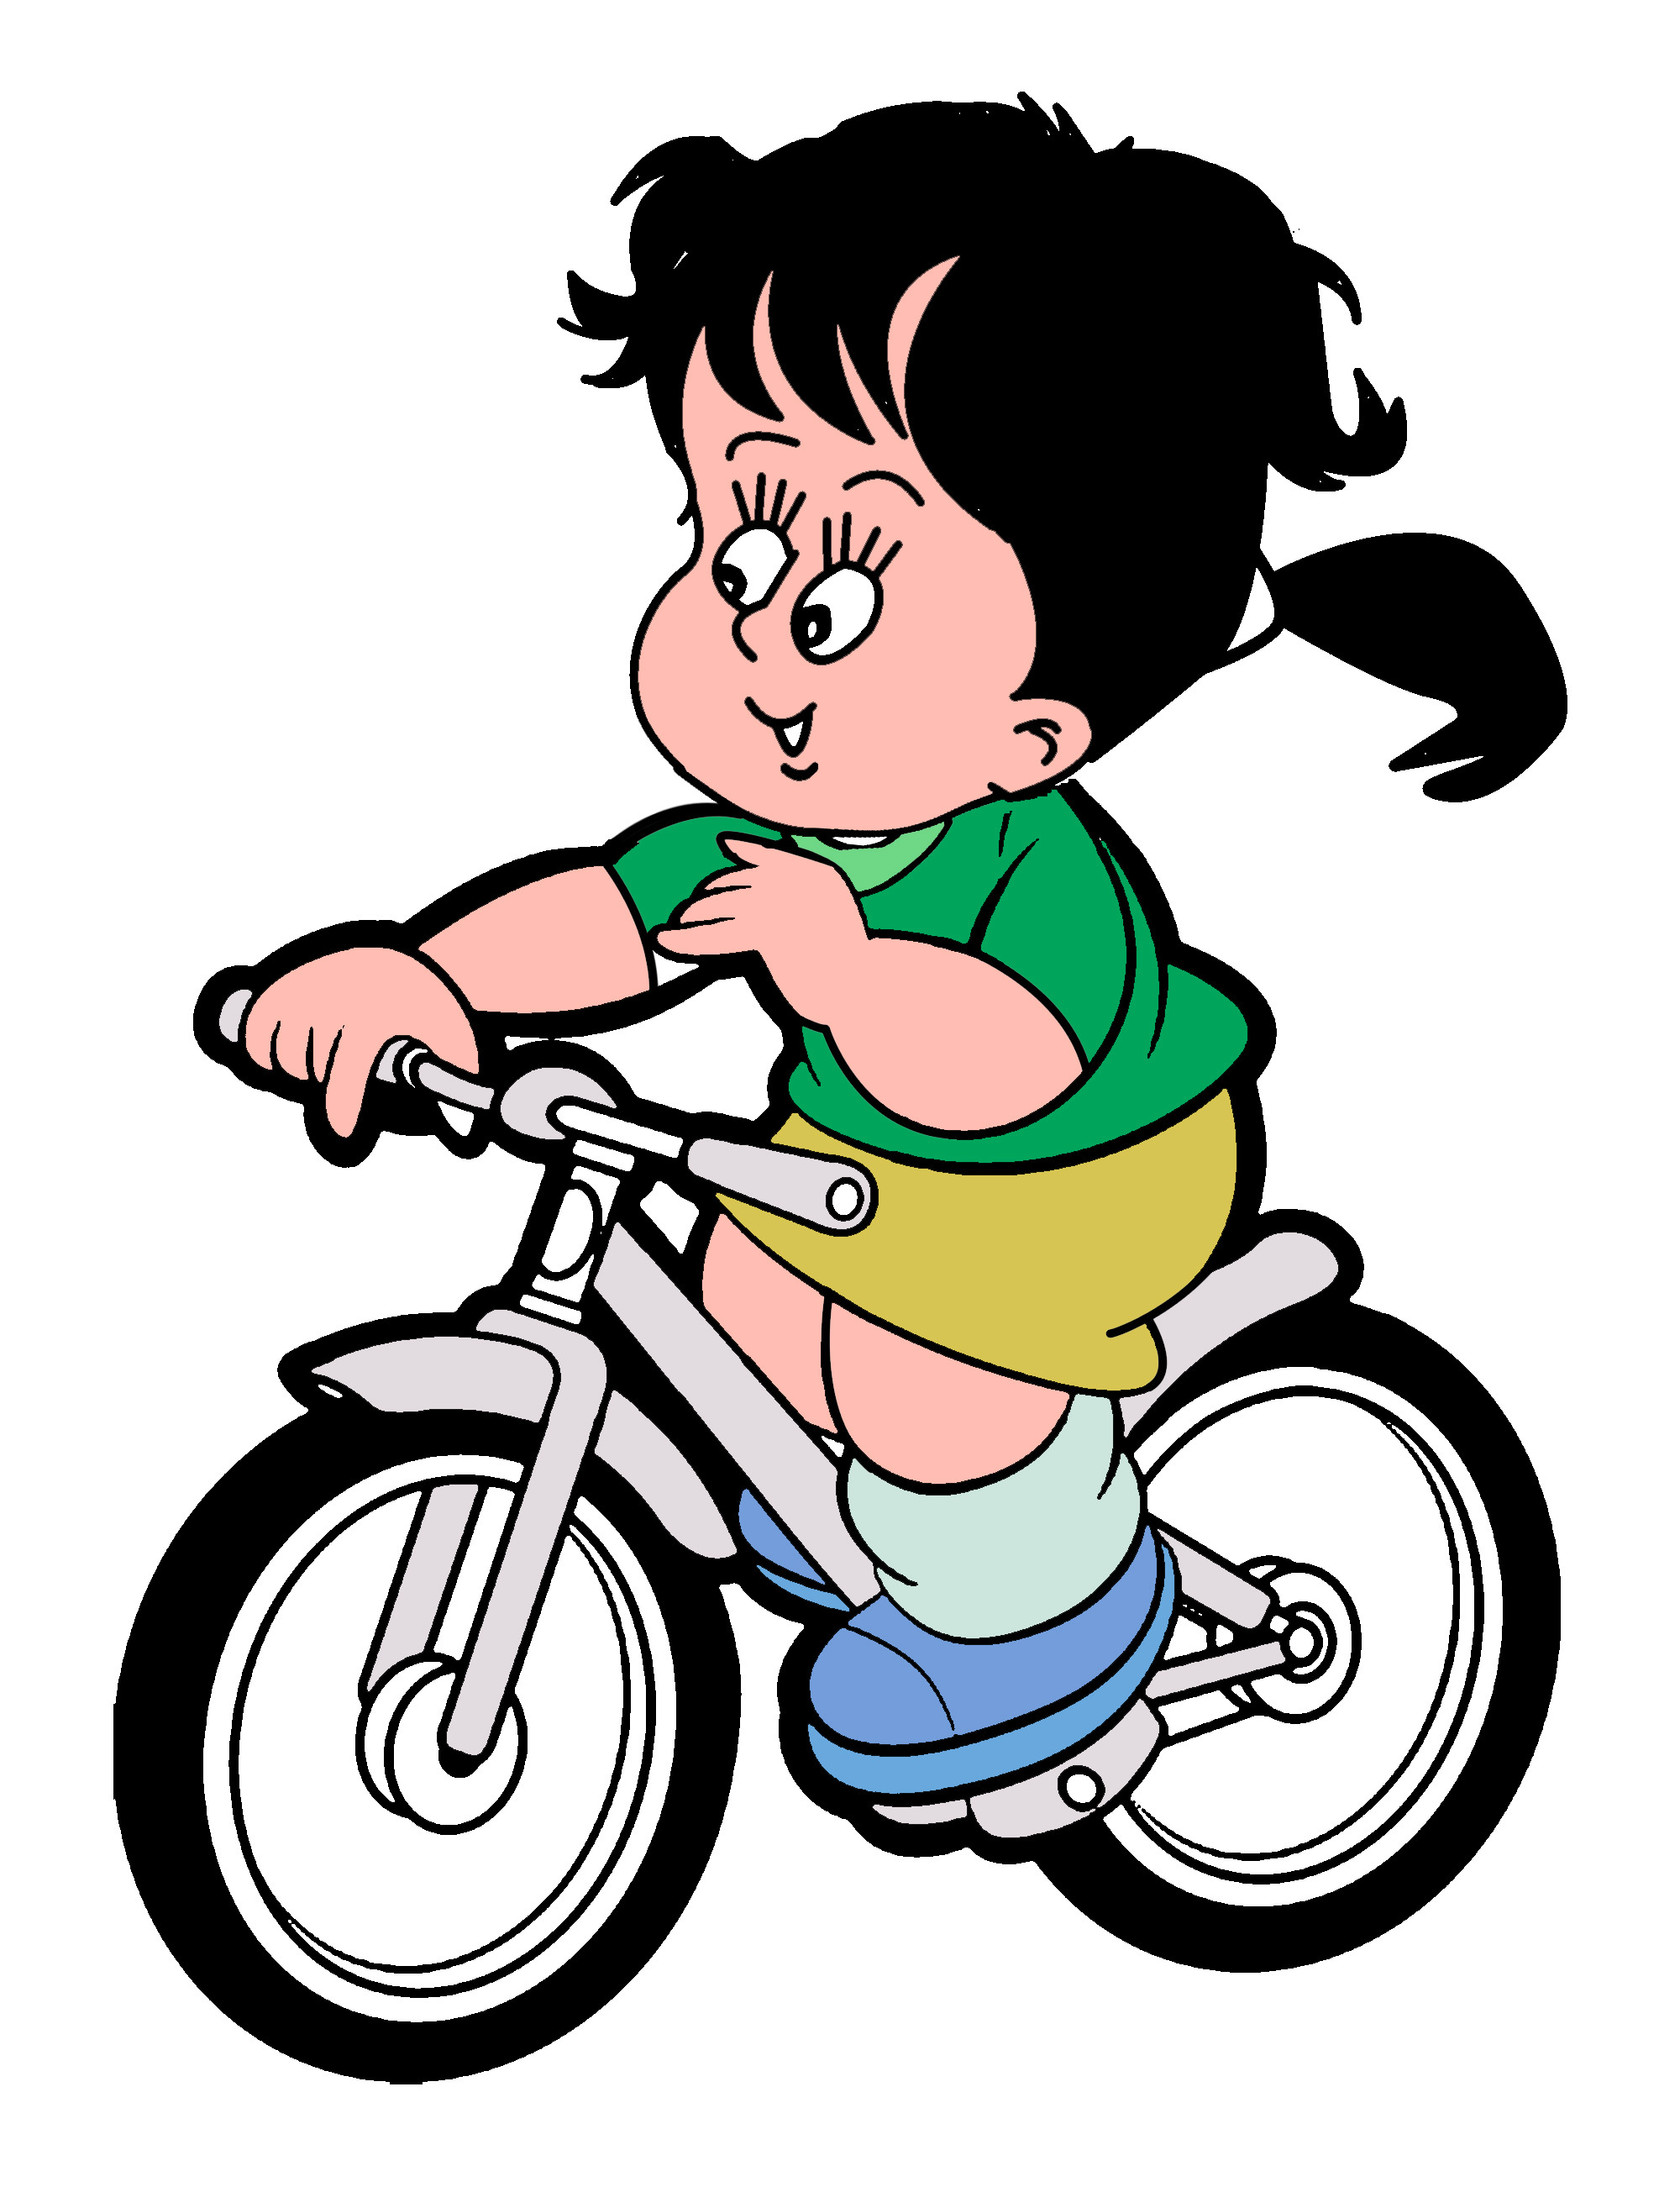 kid on bike clipart - photo #36